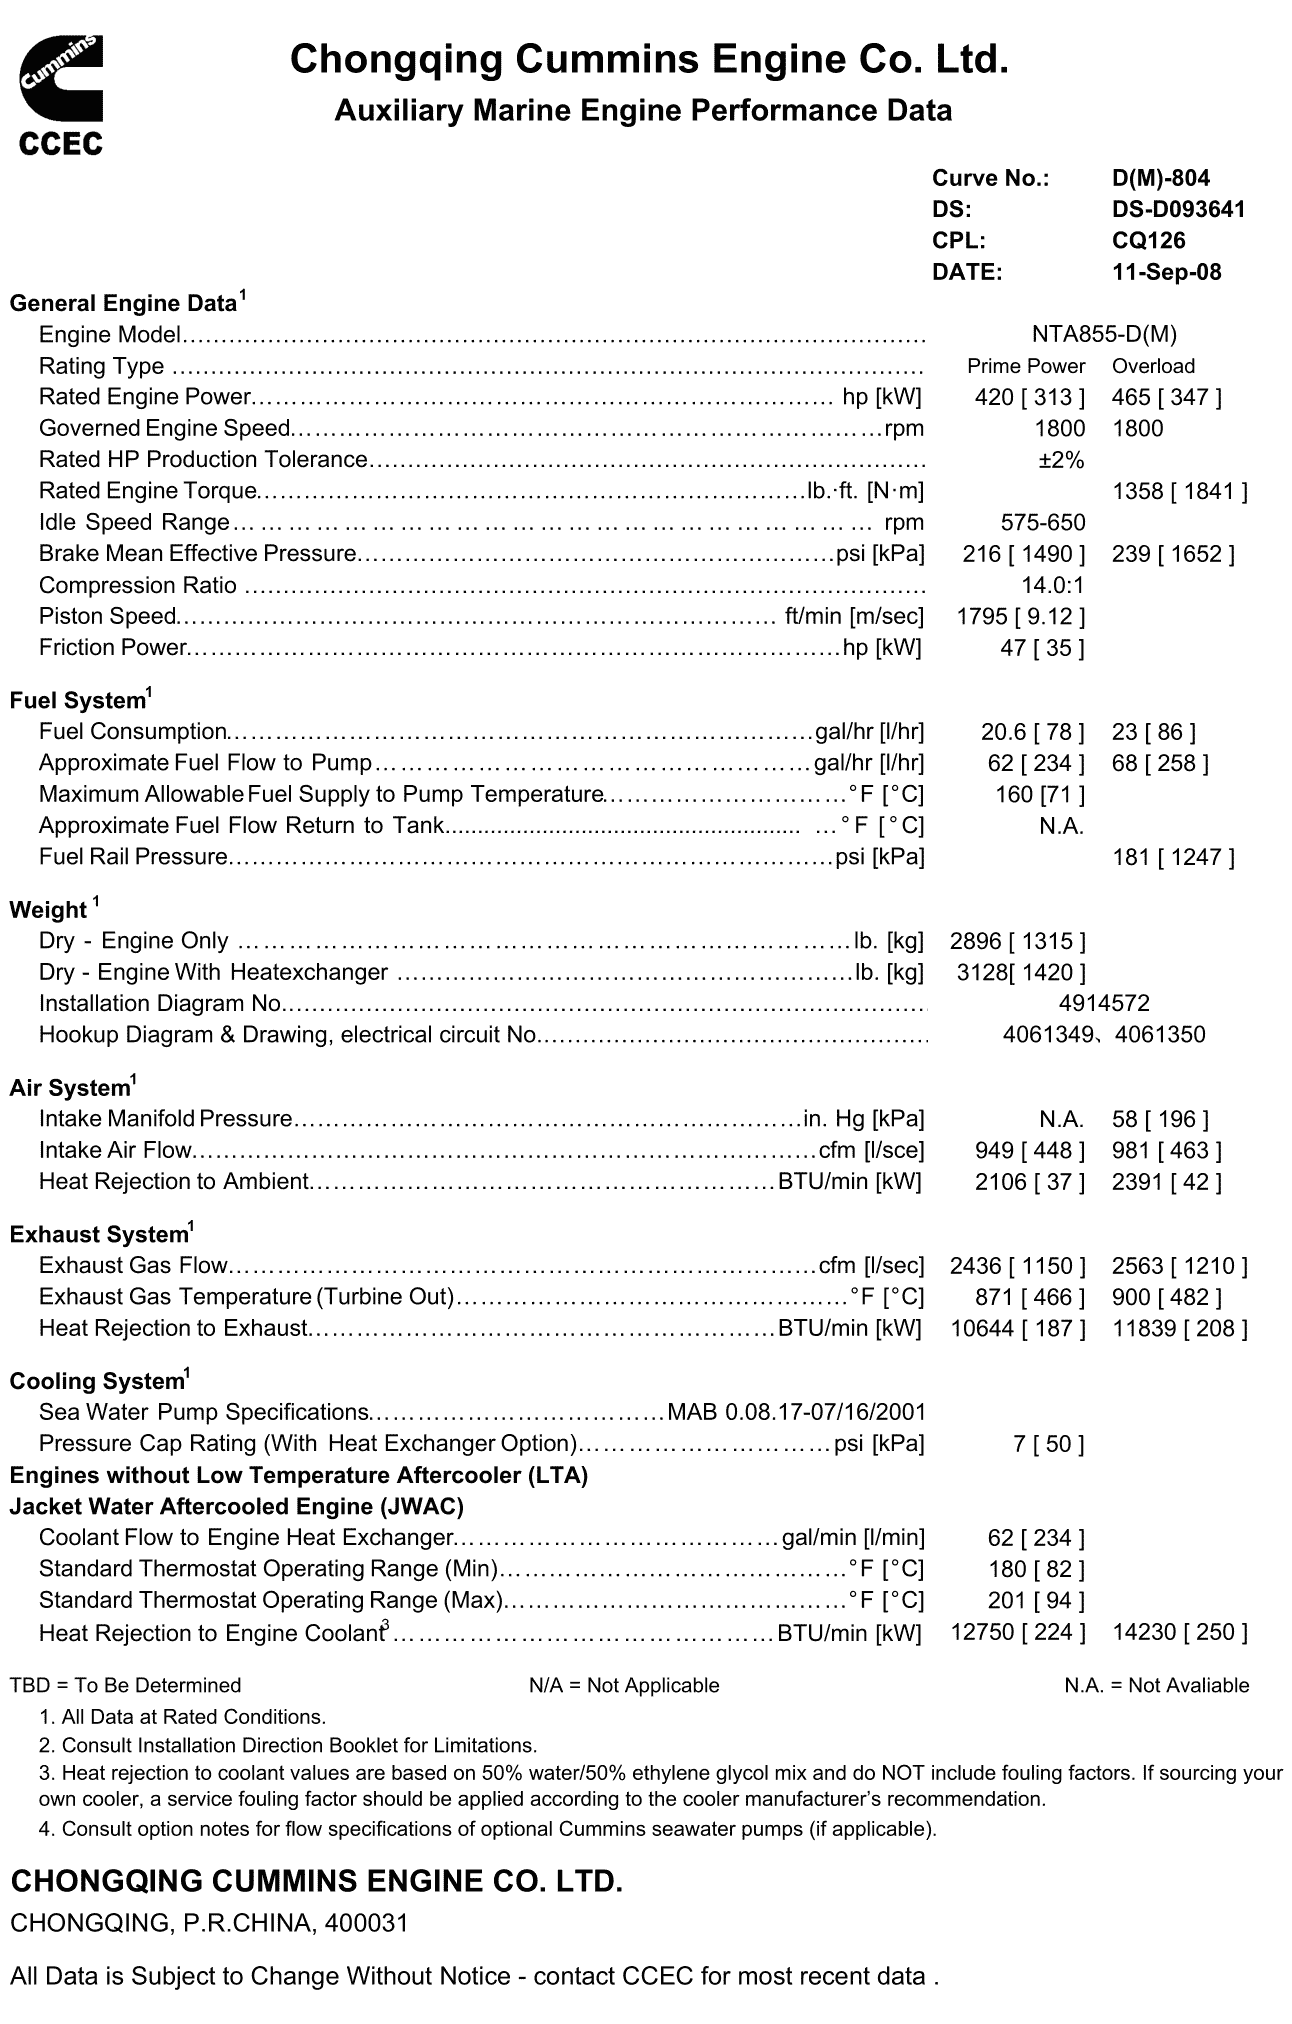 Cummins NTA855-DM313 datasheet